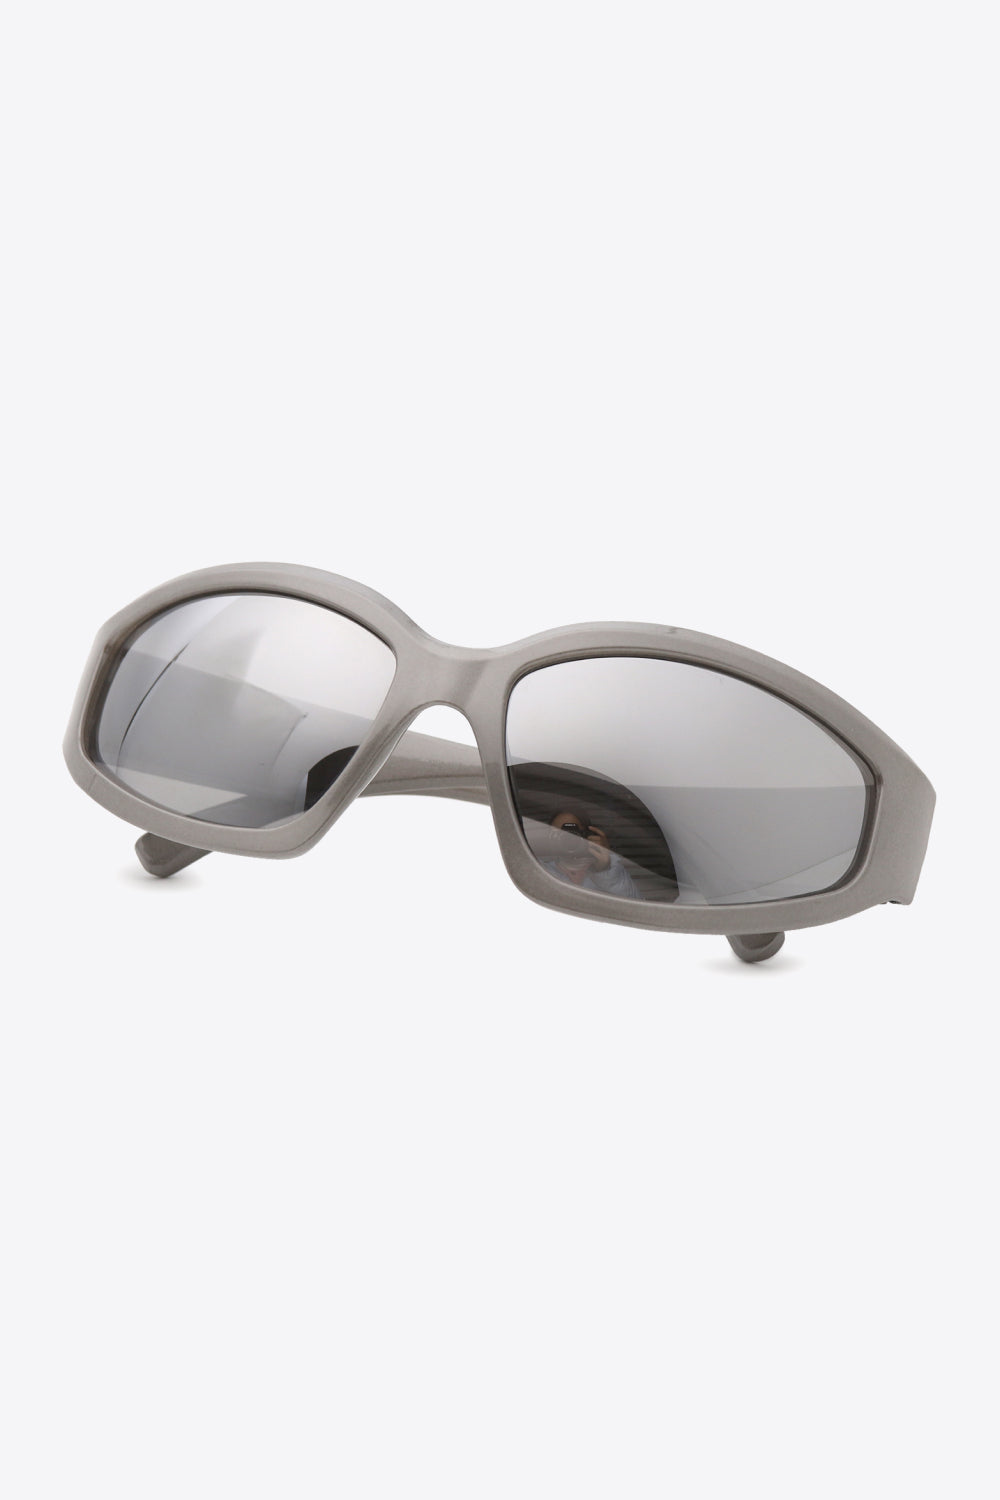 UV400 Polycarbonate Cat-Eye Sunglasses Trendsi